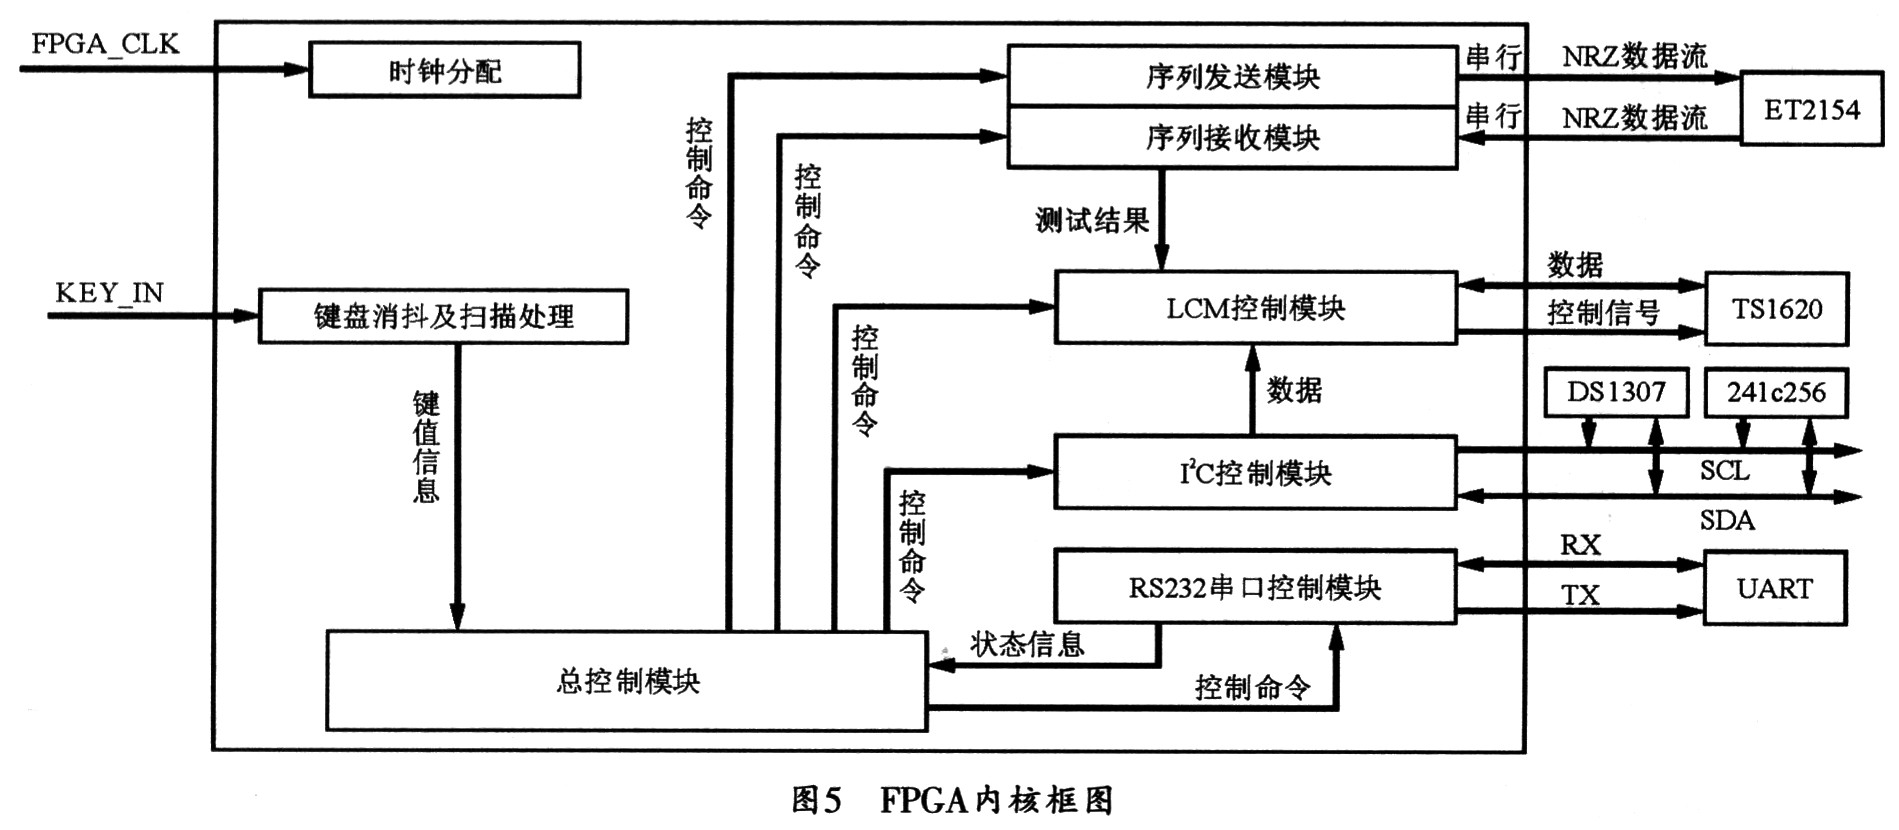 FPGA内核中各个模块之间的相互关系